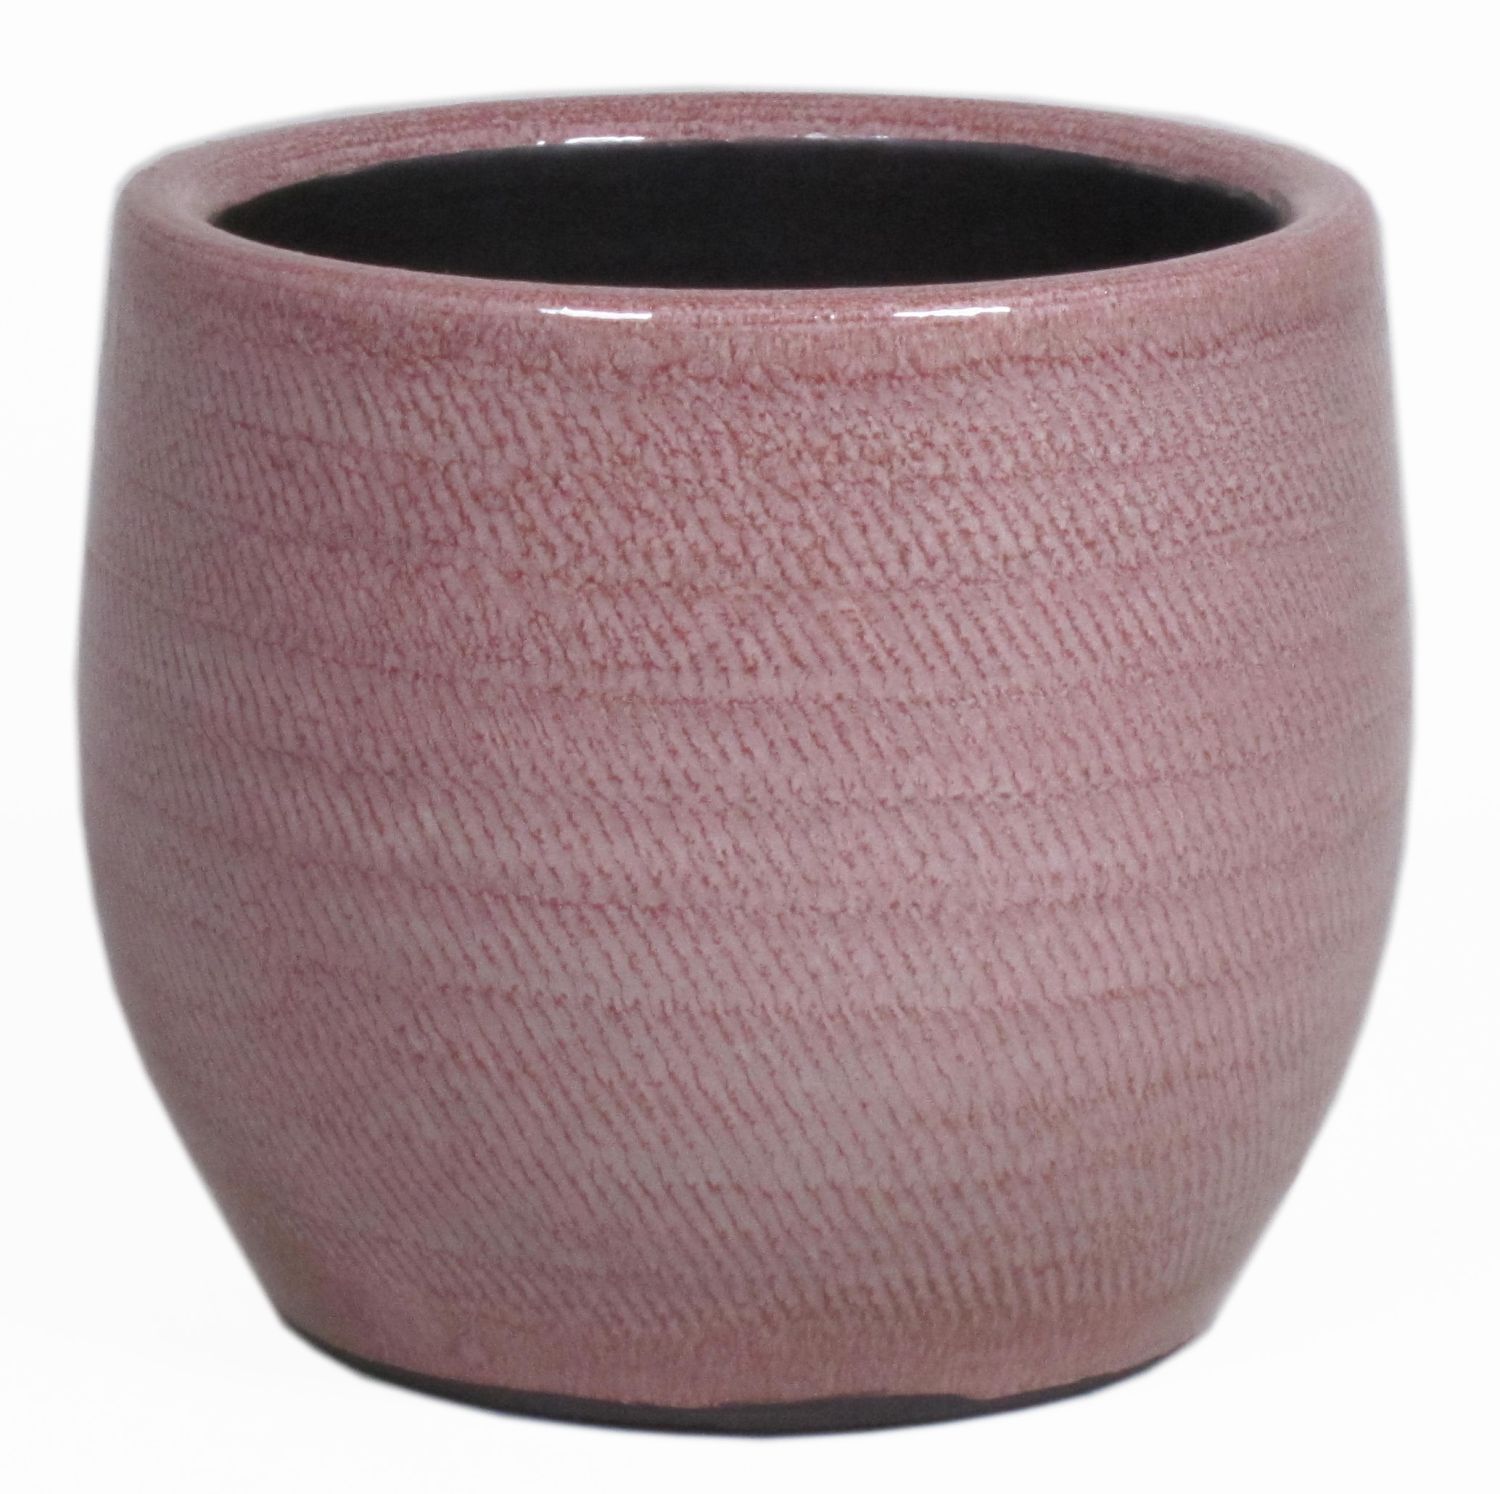 Moderner Übertopf KALIA aus Keramik, Rillen, altrosa, 19cm, Ø20cm